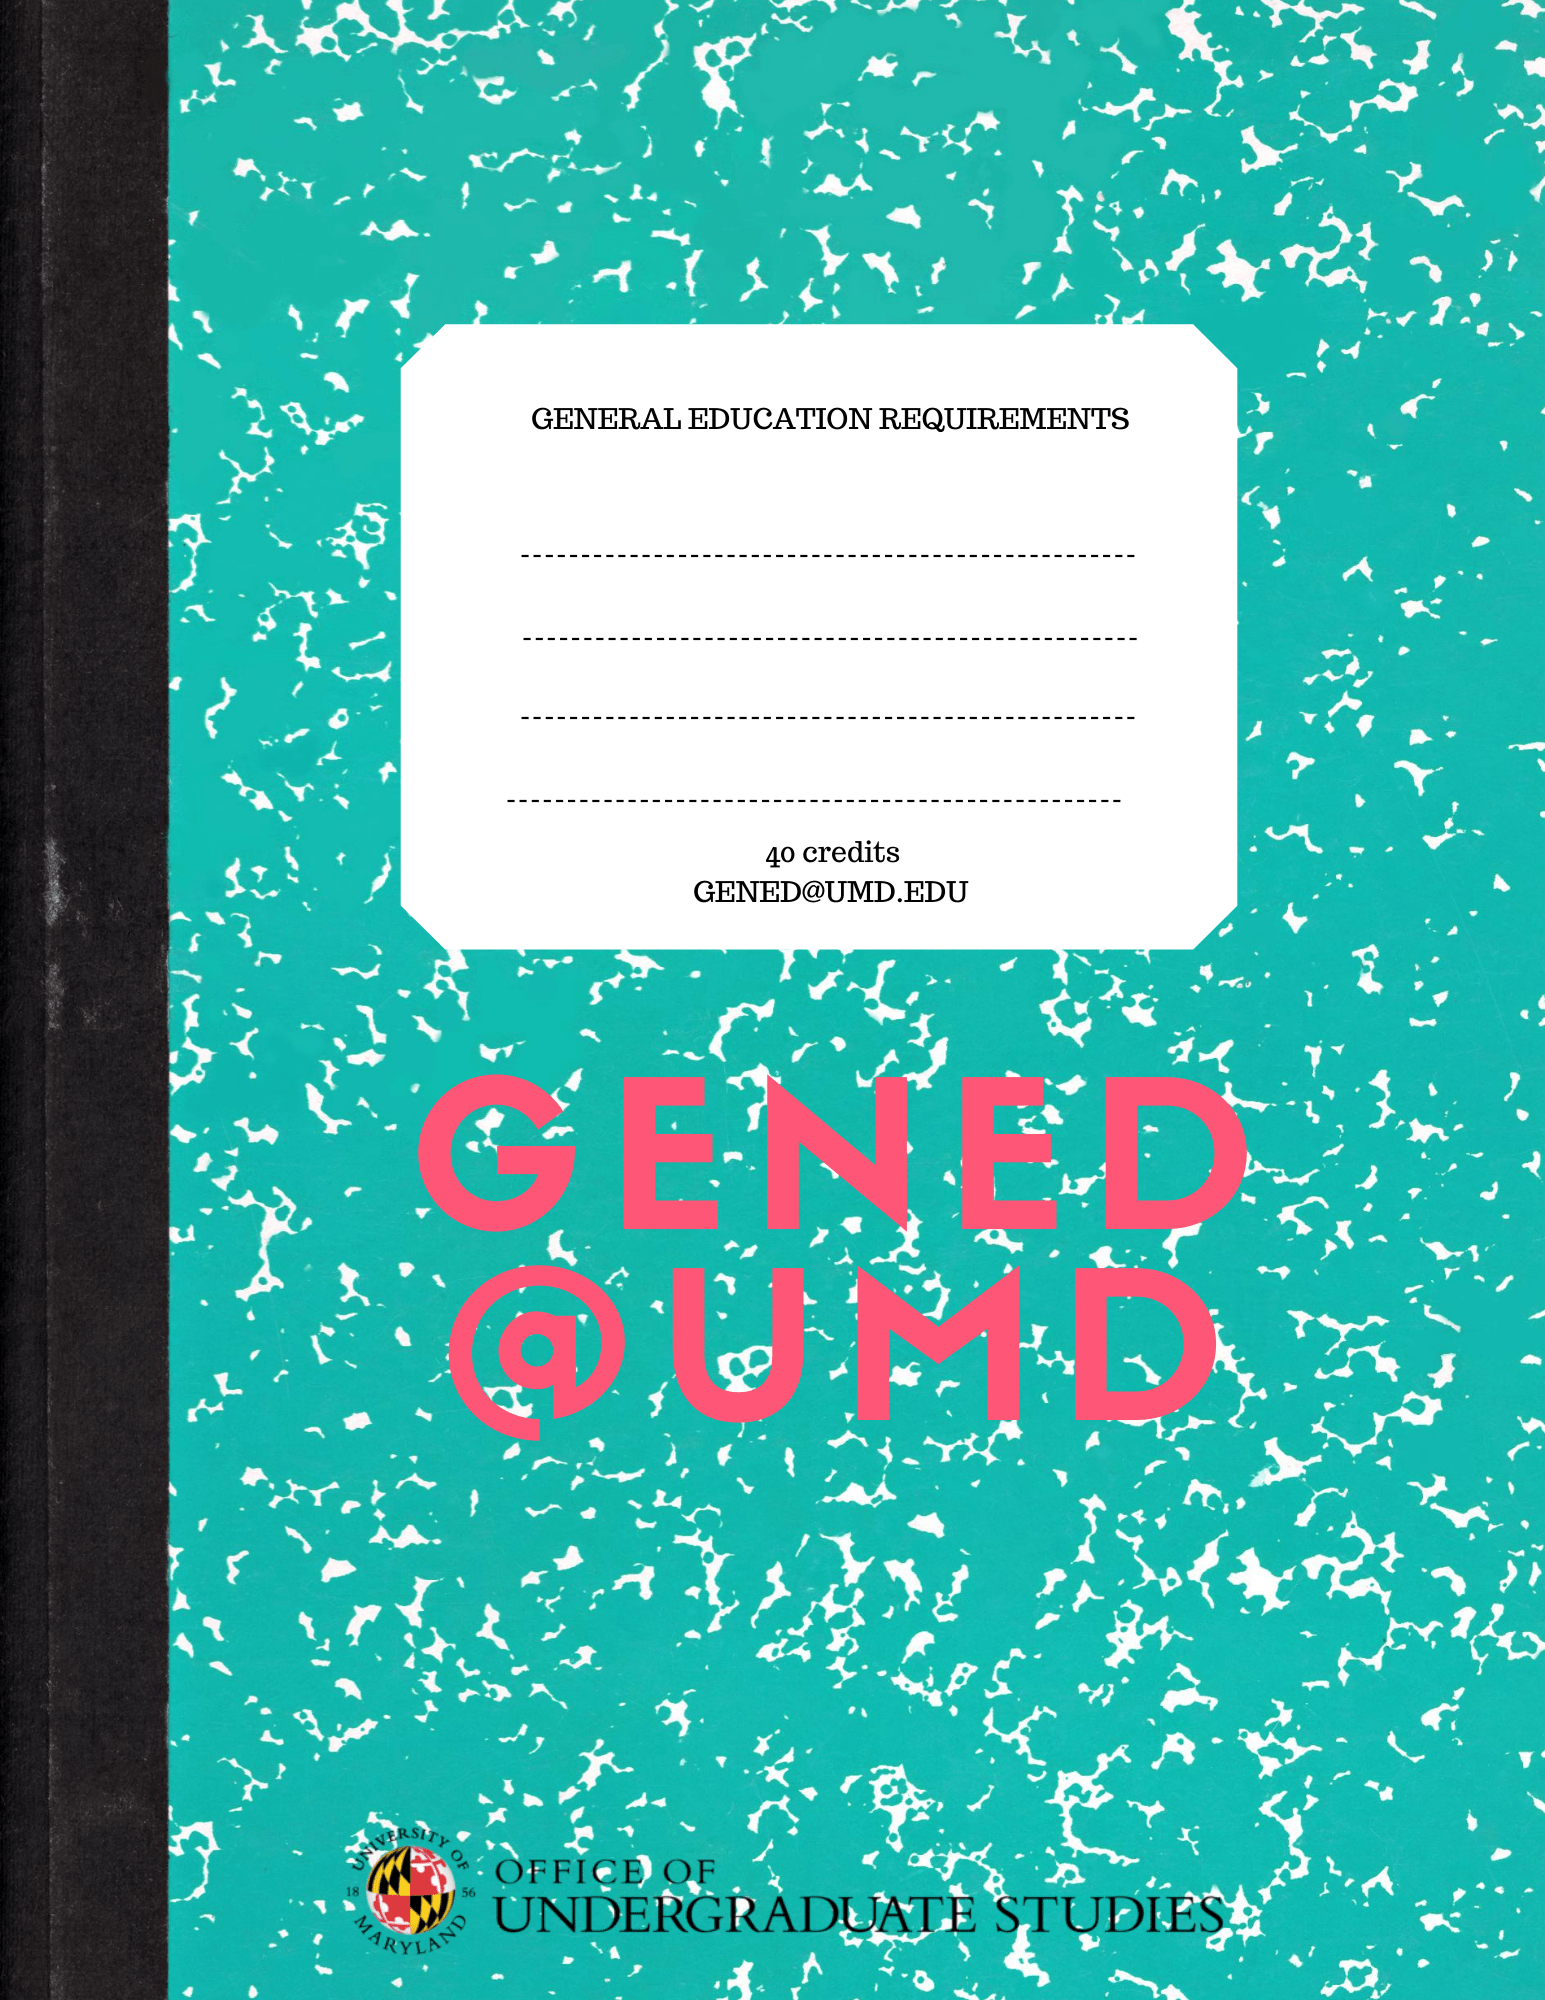 cover of gen folder folder, looks like composition book